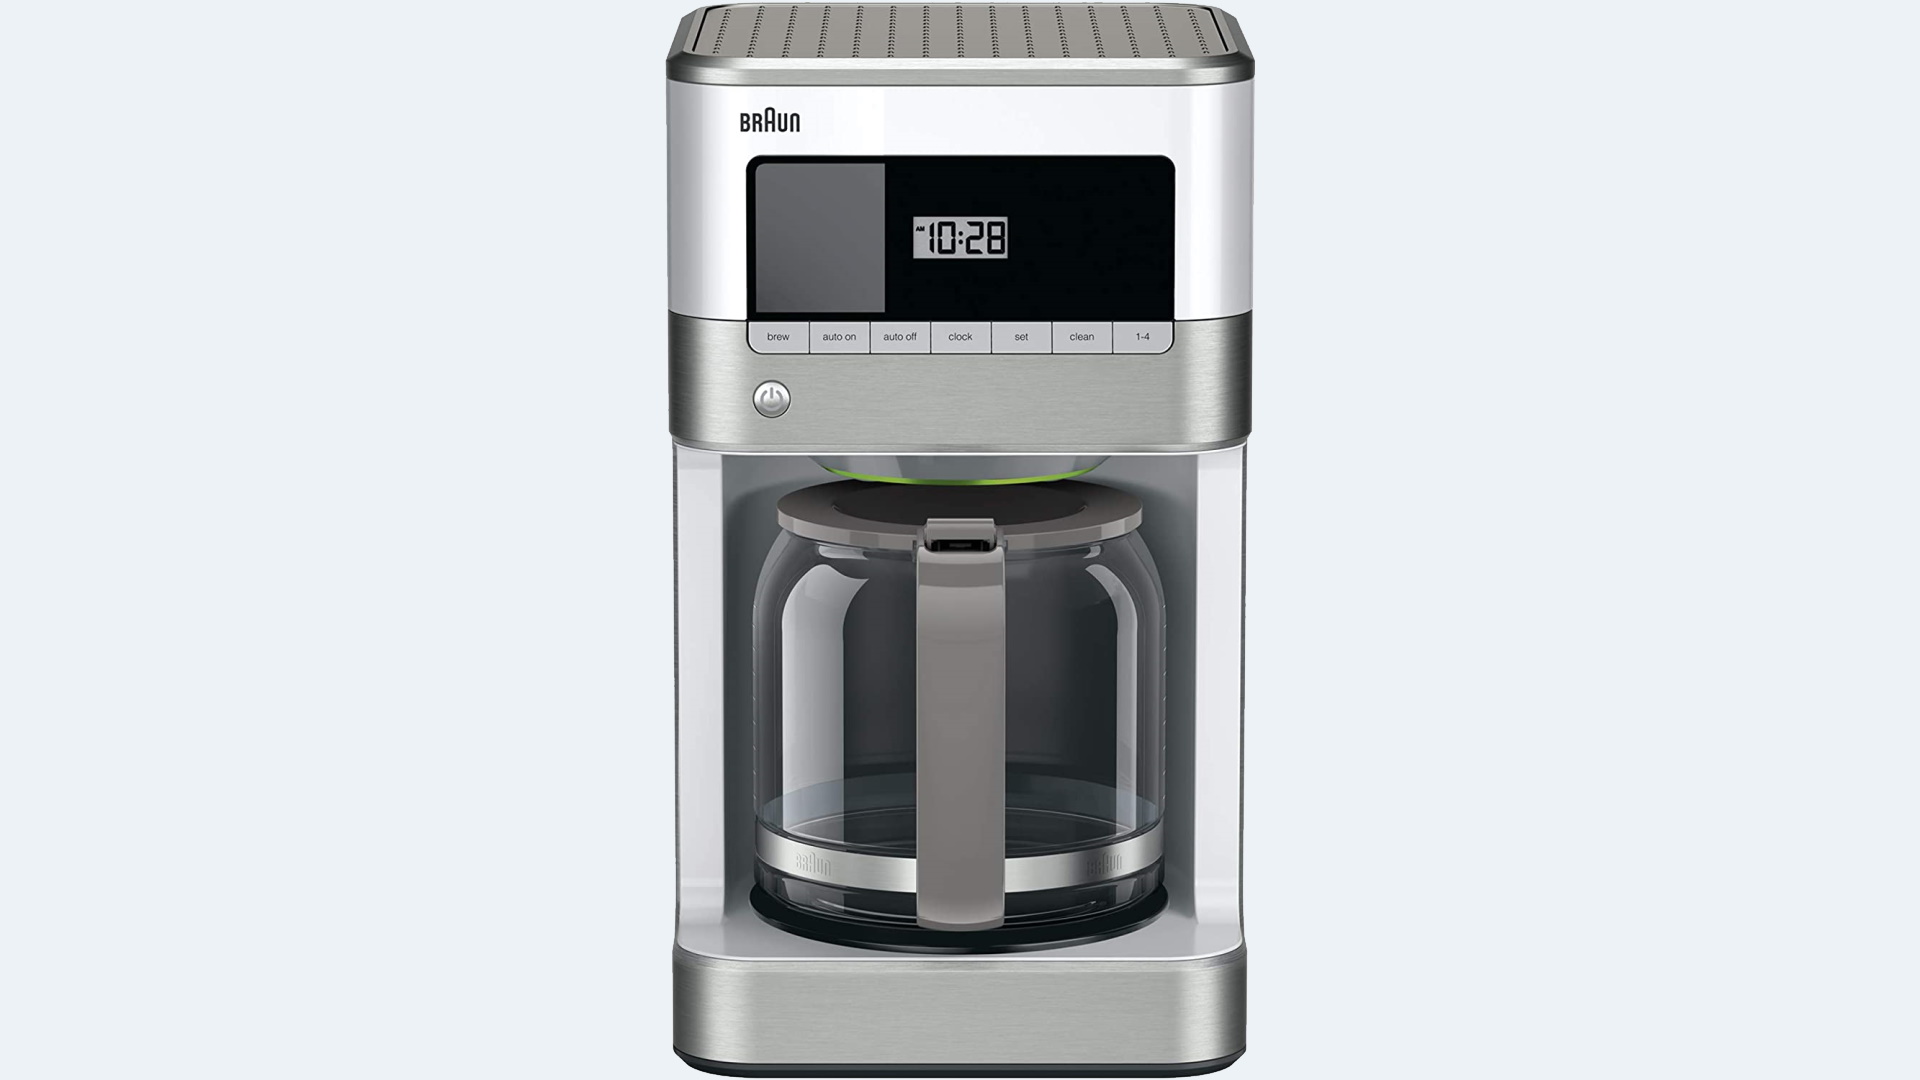 The best appliances for student living: Braun Brew Sense Drip Coffee Maker KF6050